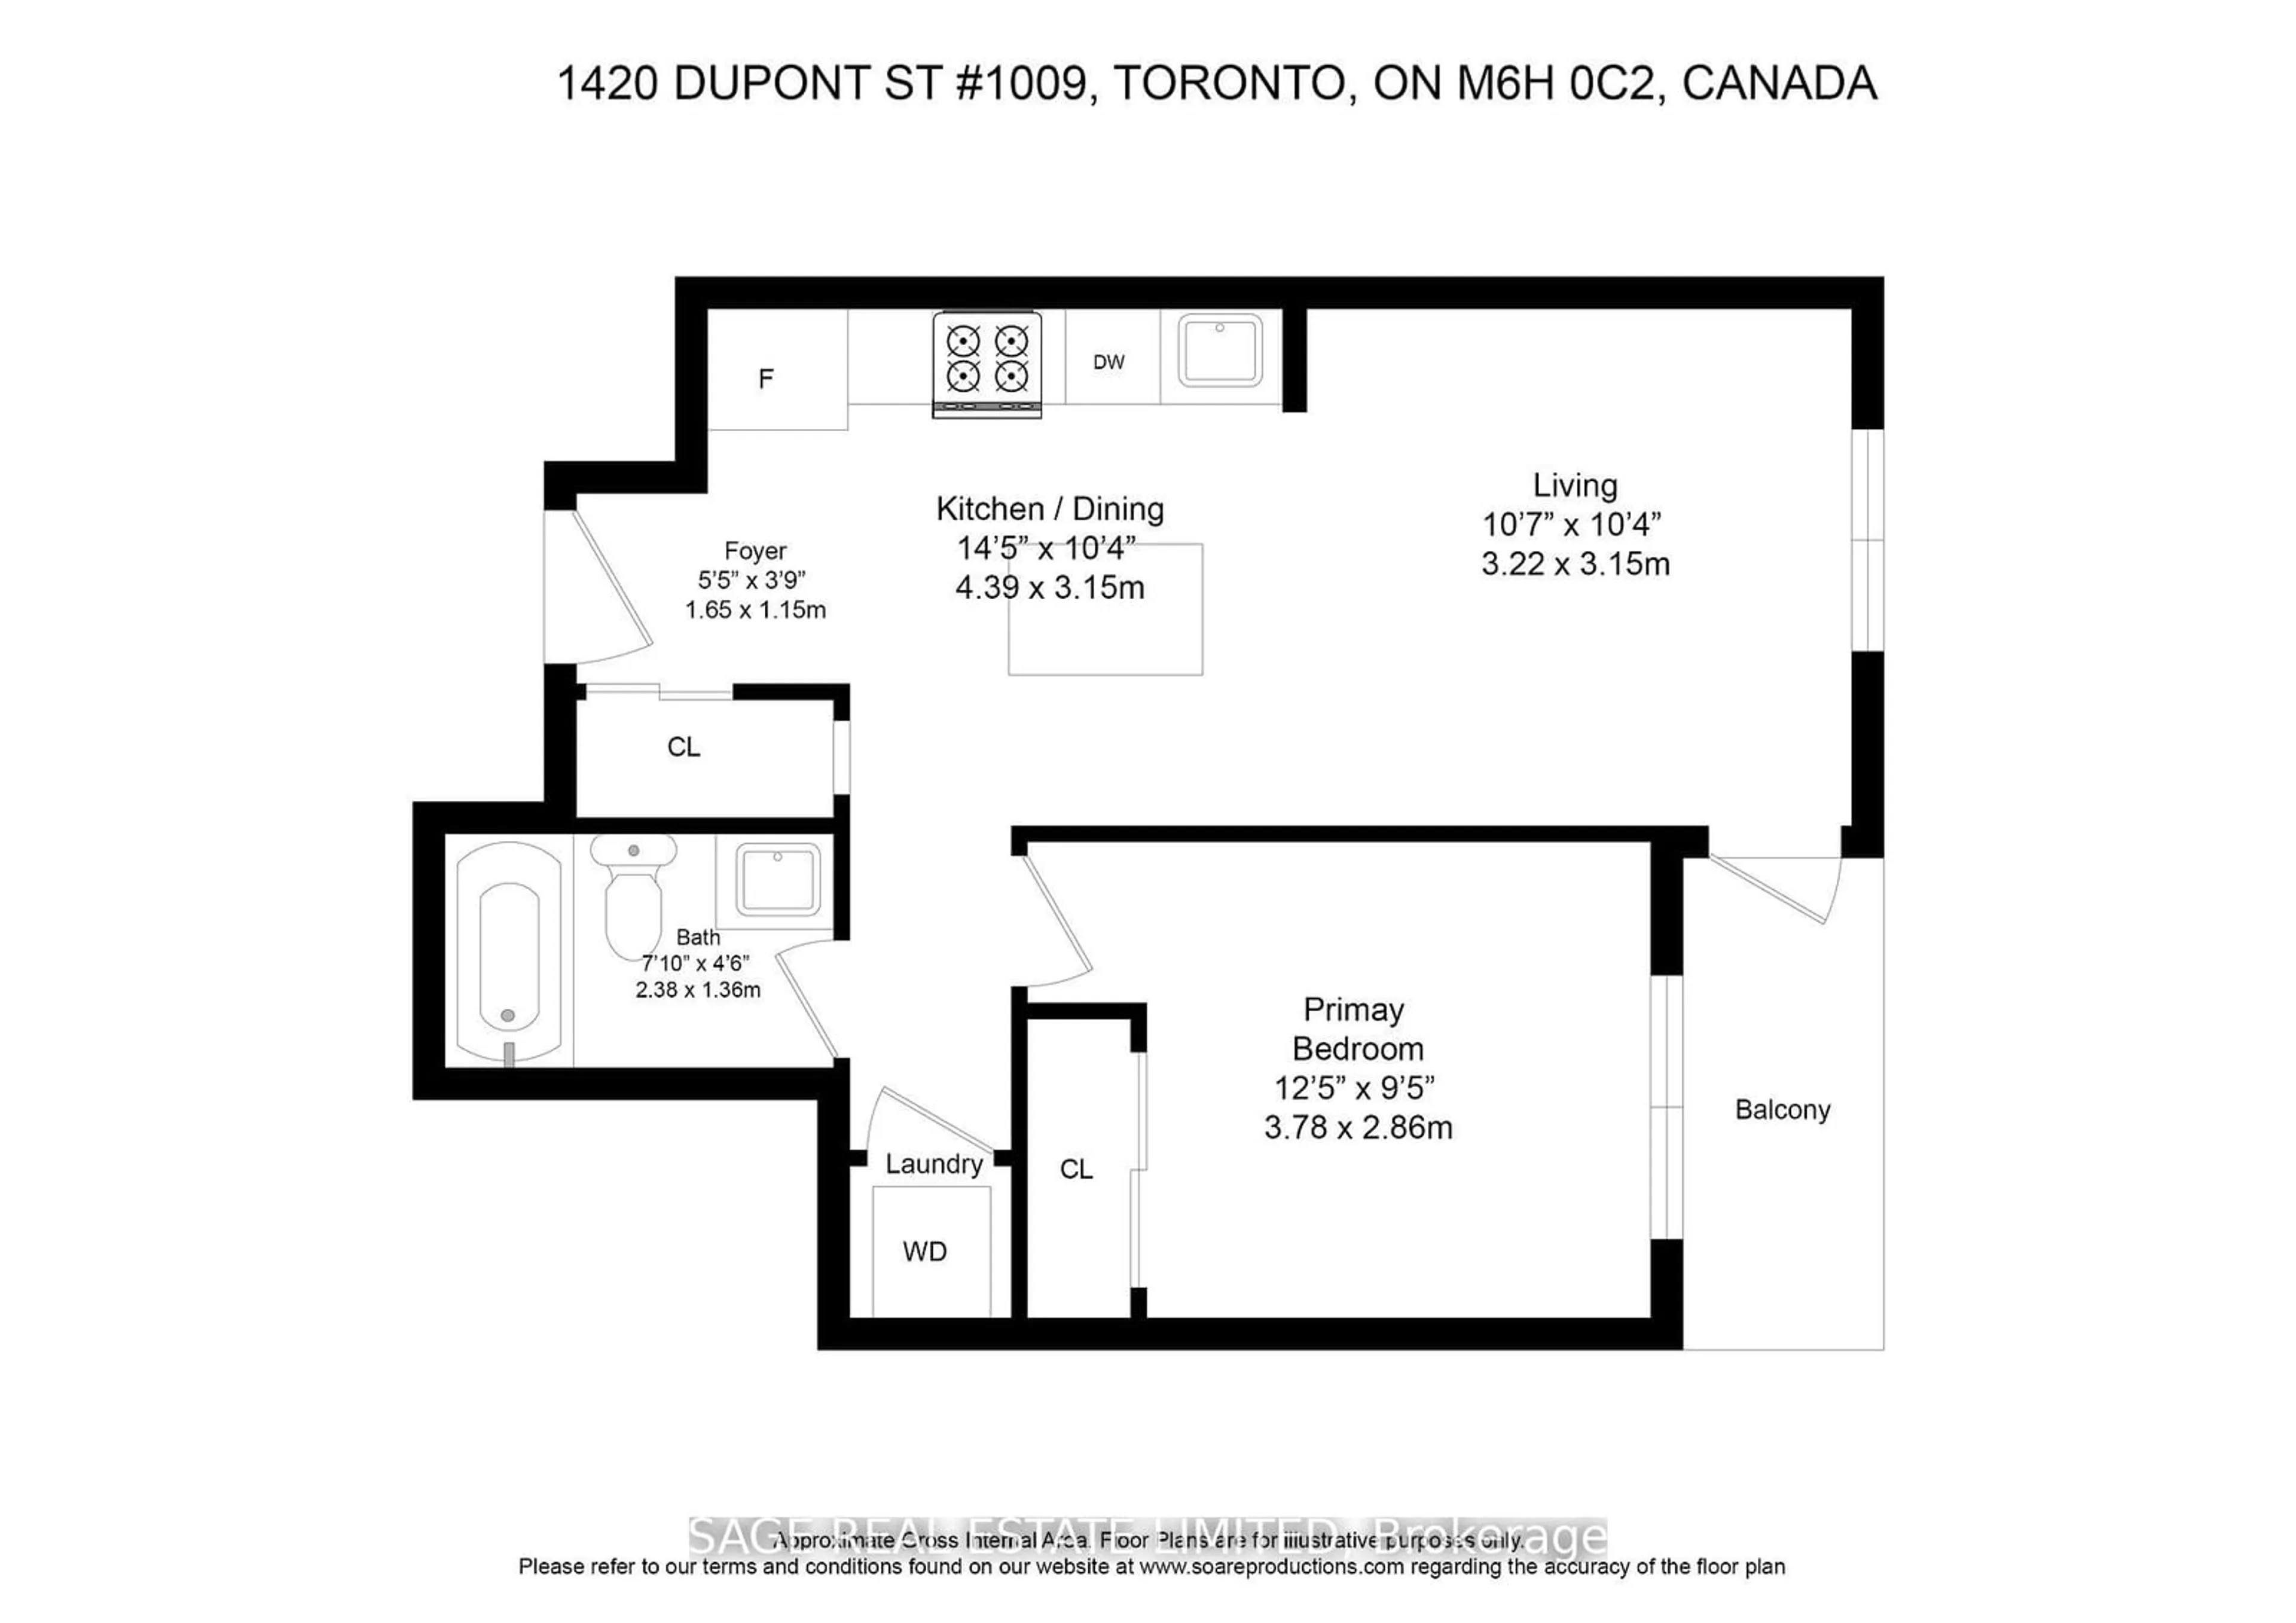 Floor plan for 1420 Dupont St #1009, Toronto Ontario M6H 0C2